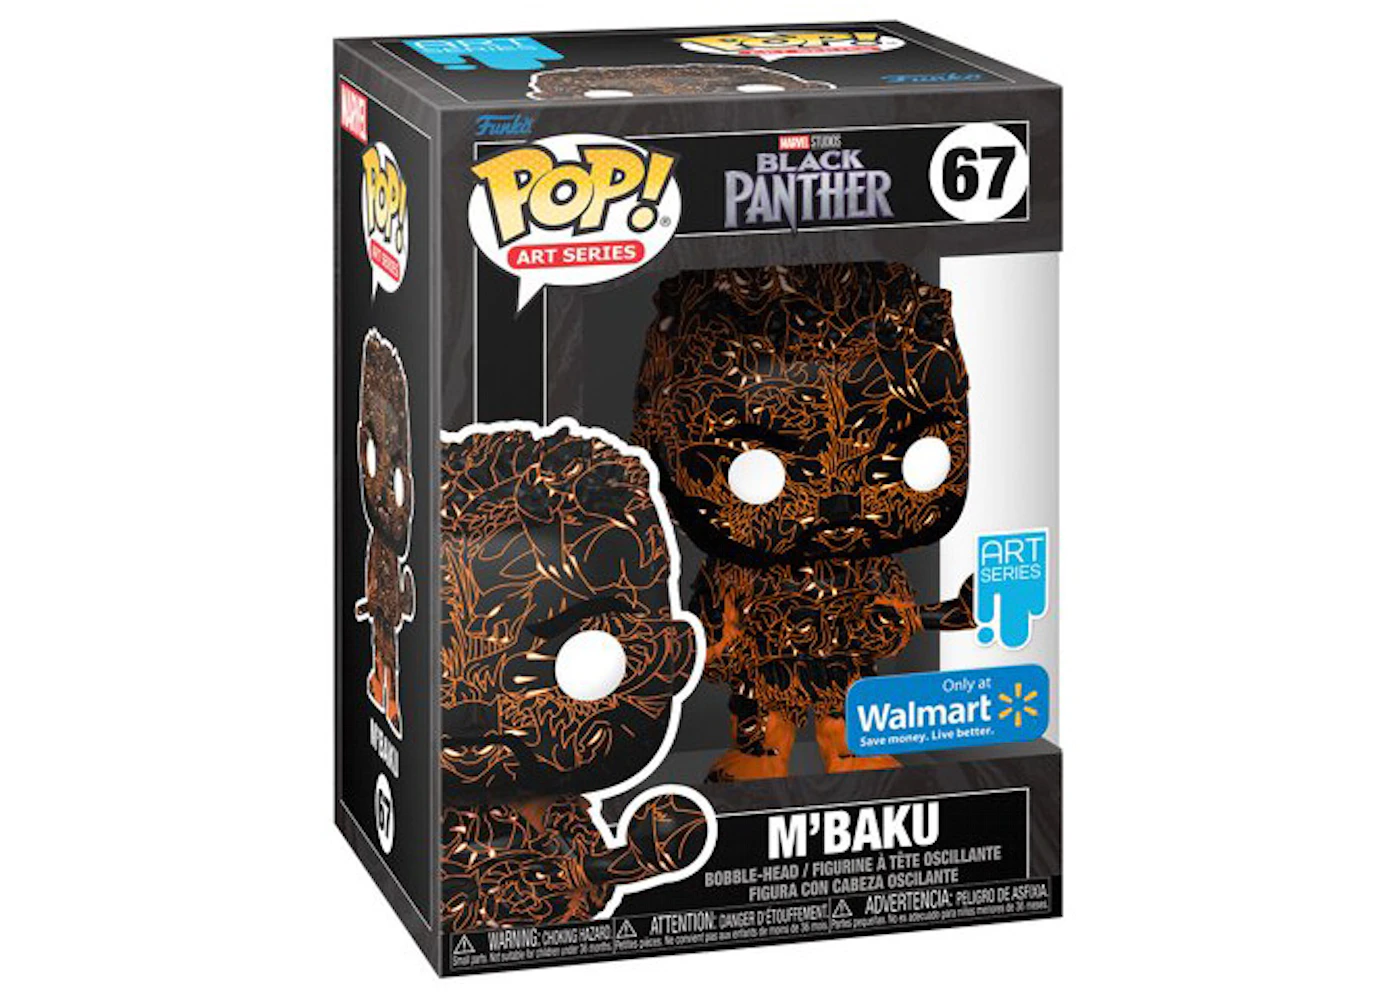 Funko Pop! Art Marvel Studios Black Panther M'Baku Art Series Walmart Exclusive Figure #67 - ES